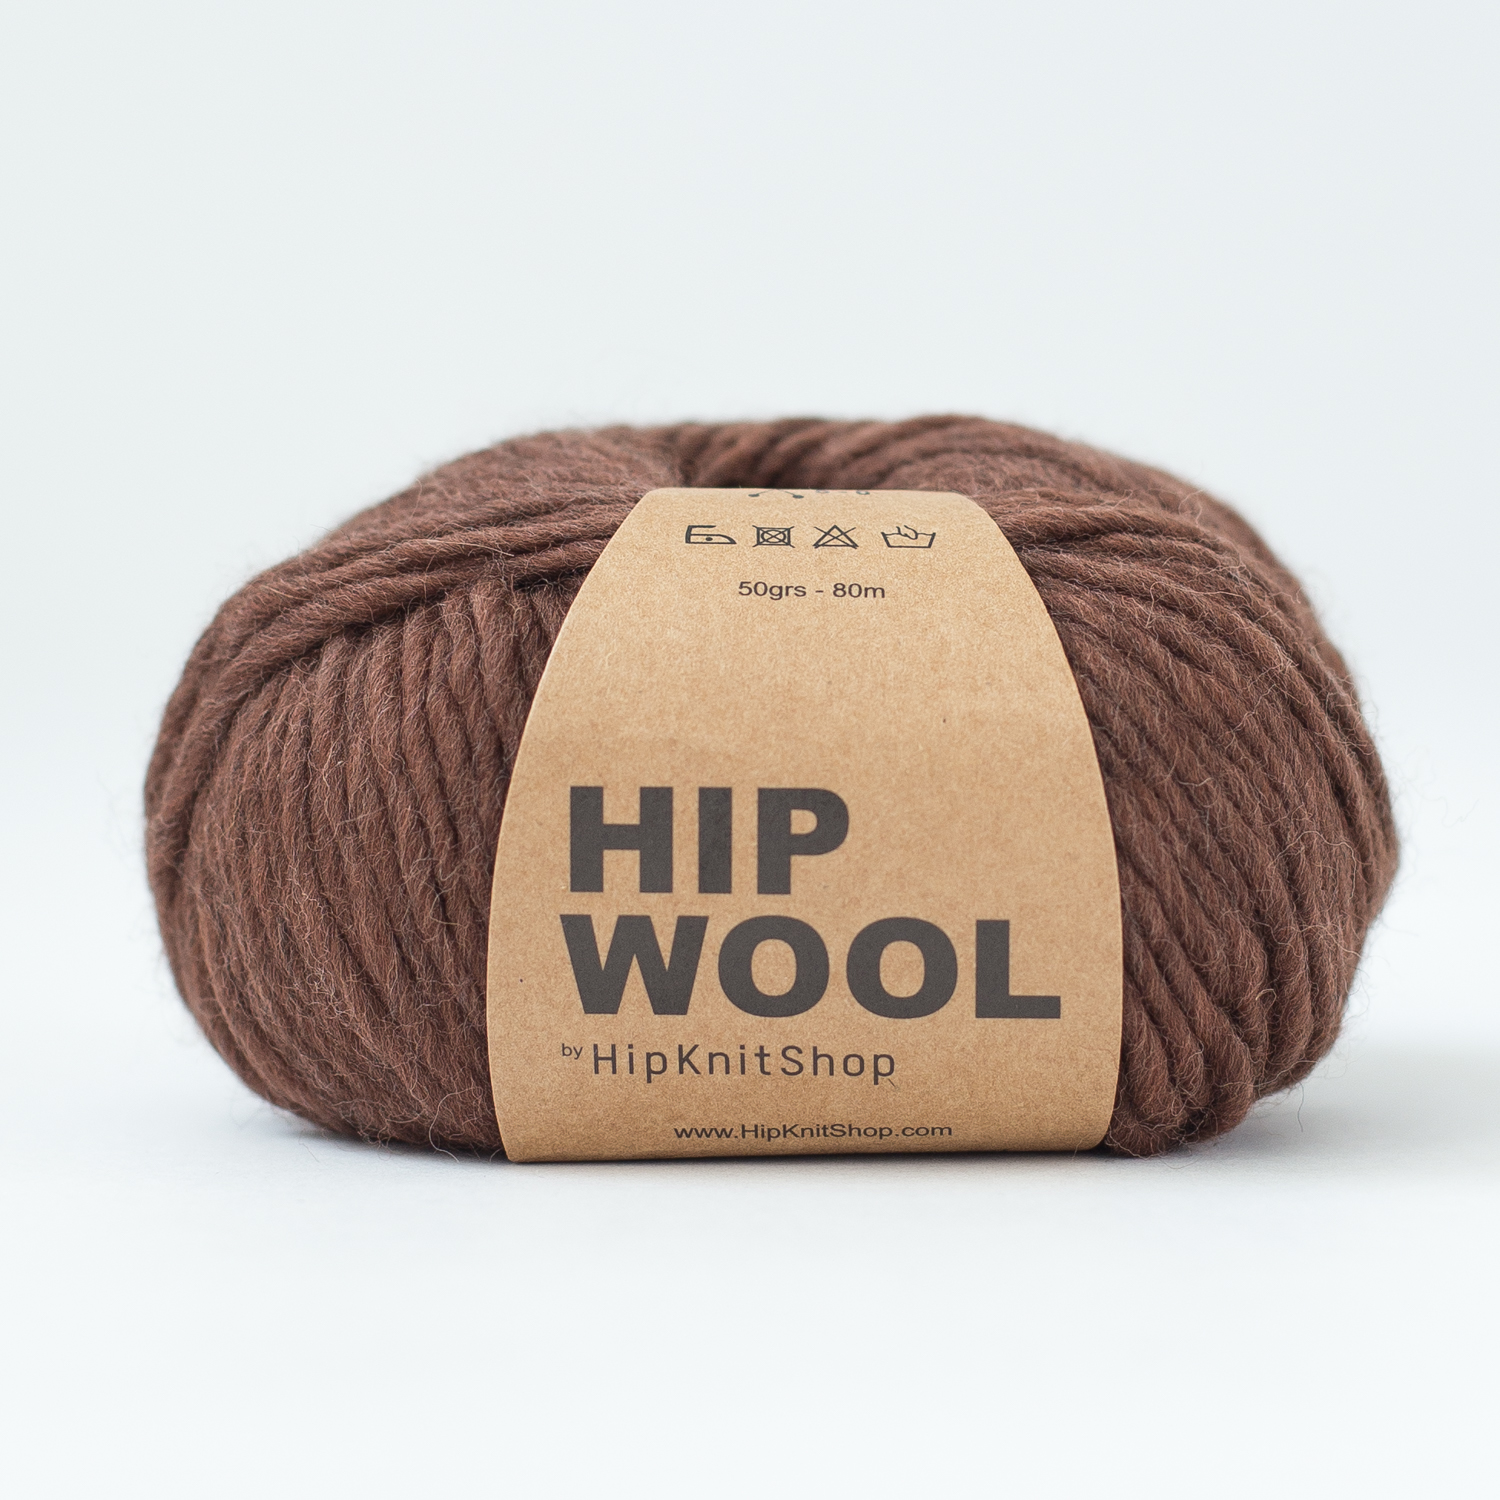 hip wool yarn